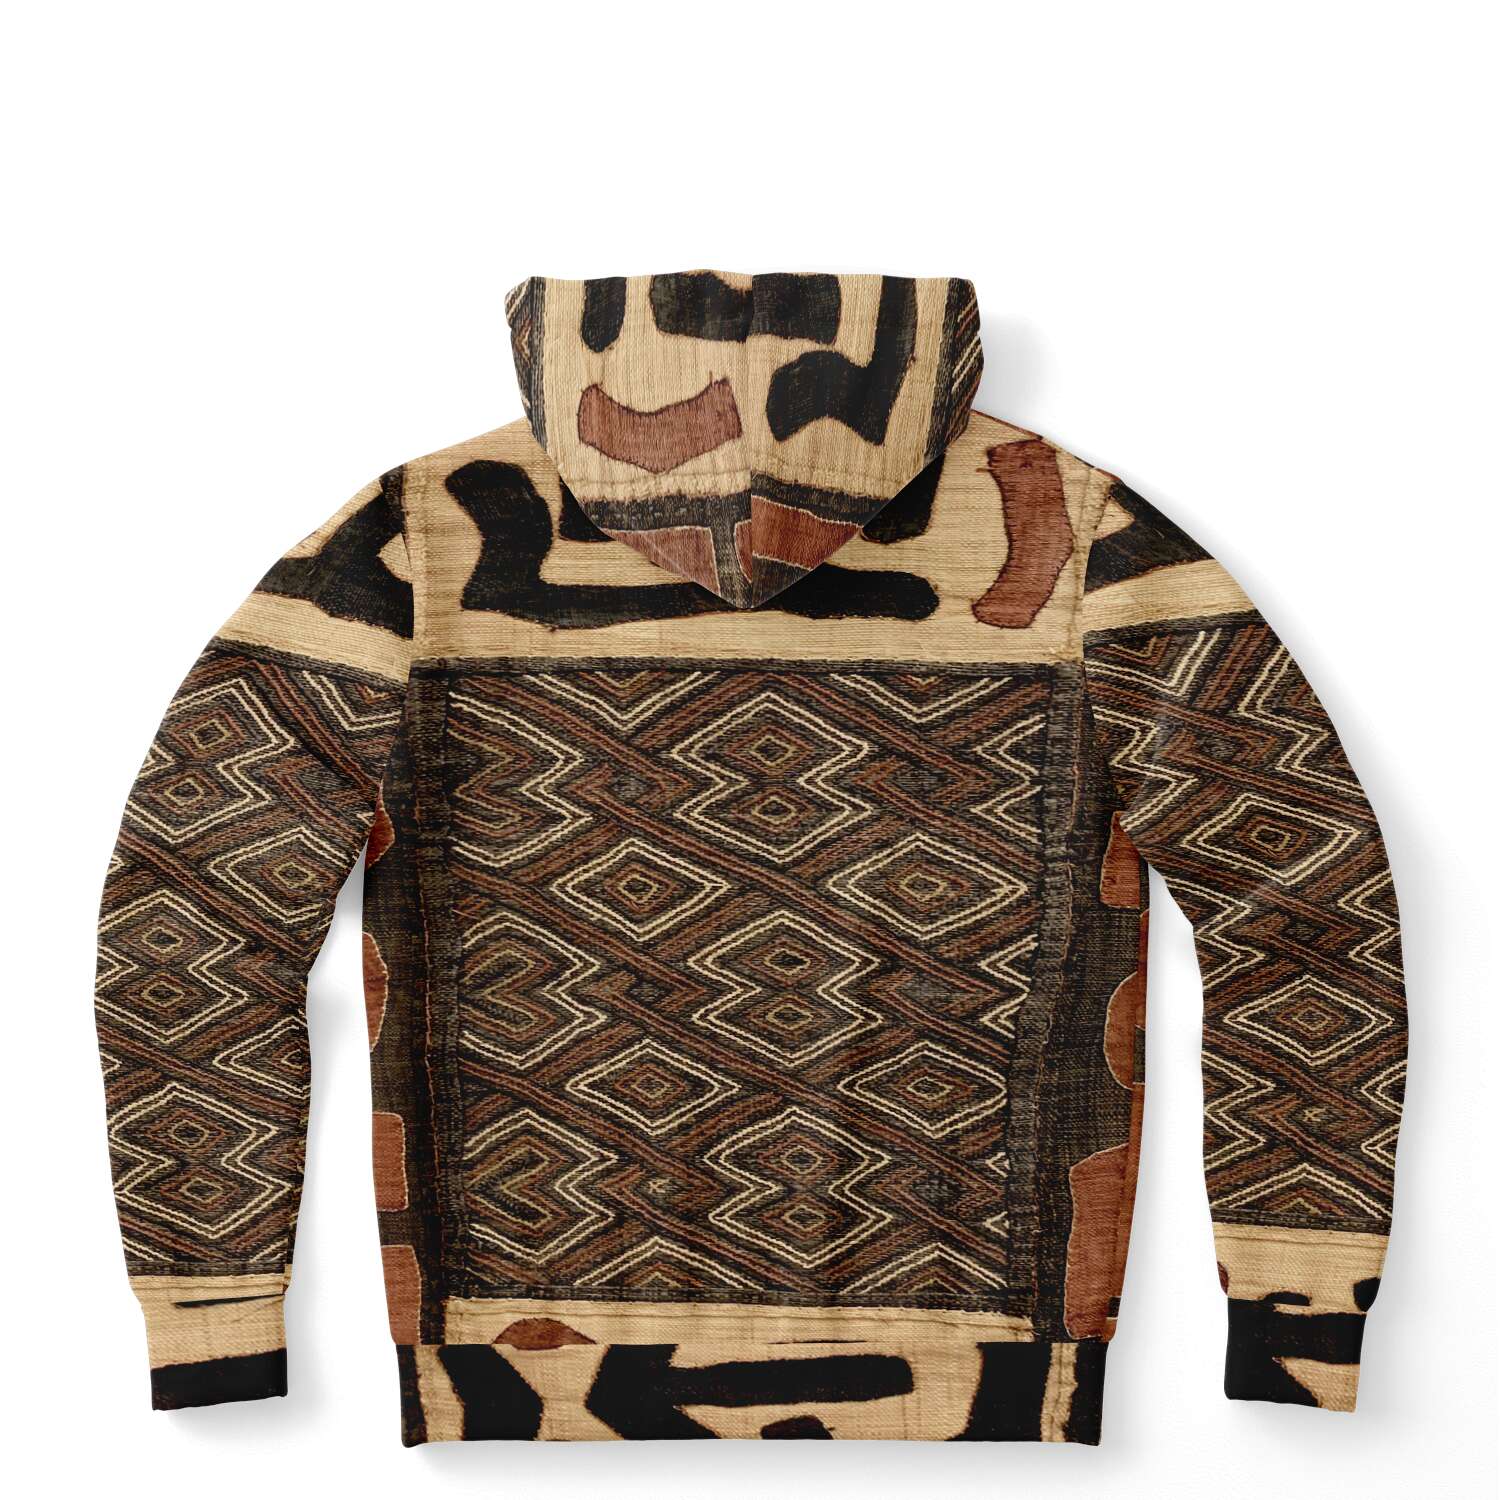 Fashion Hoodie - AOP Kuba Cloth Inspired African Hoodie, Congo Bogolan Kente Cloth Mudcloth Jacket Textile Hippie Boho Afrocentric Kilim Tribal Pullover Hoodie